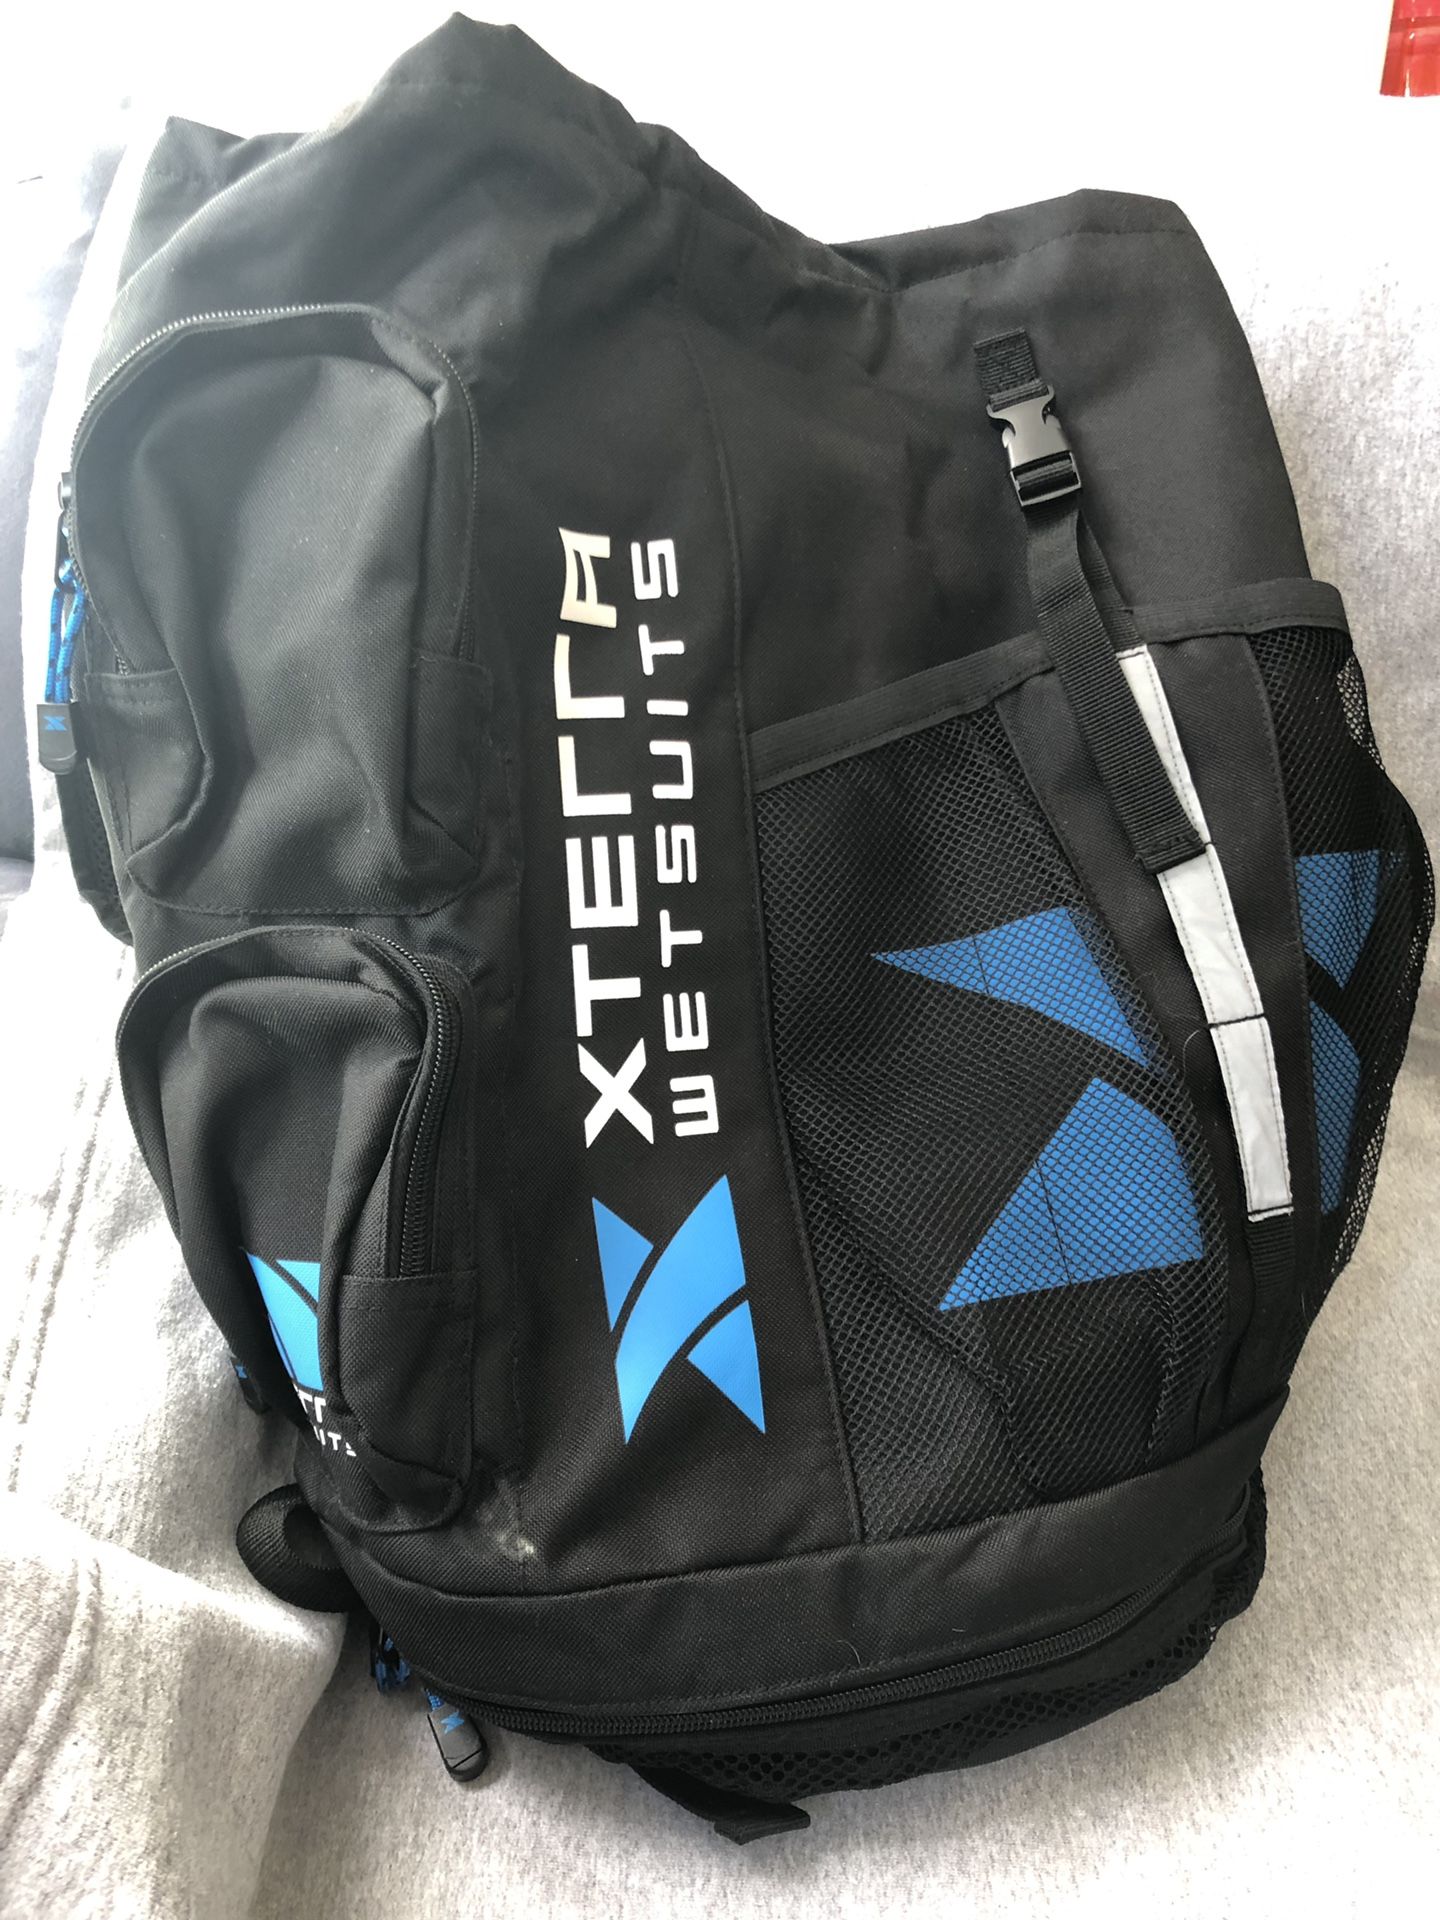 Xterra triathlon backpack transition bag